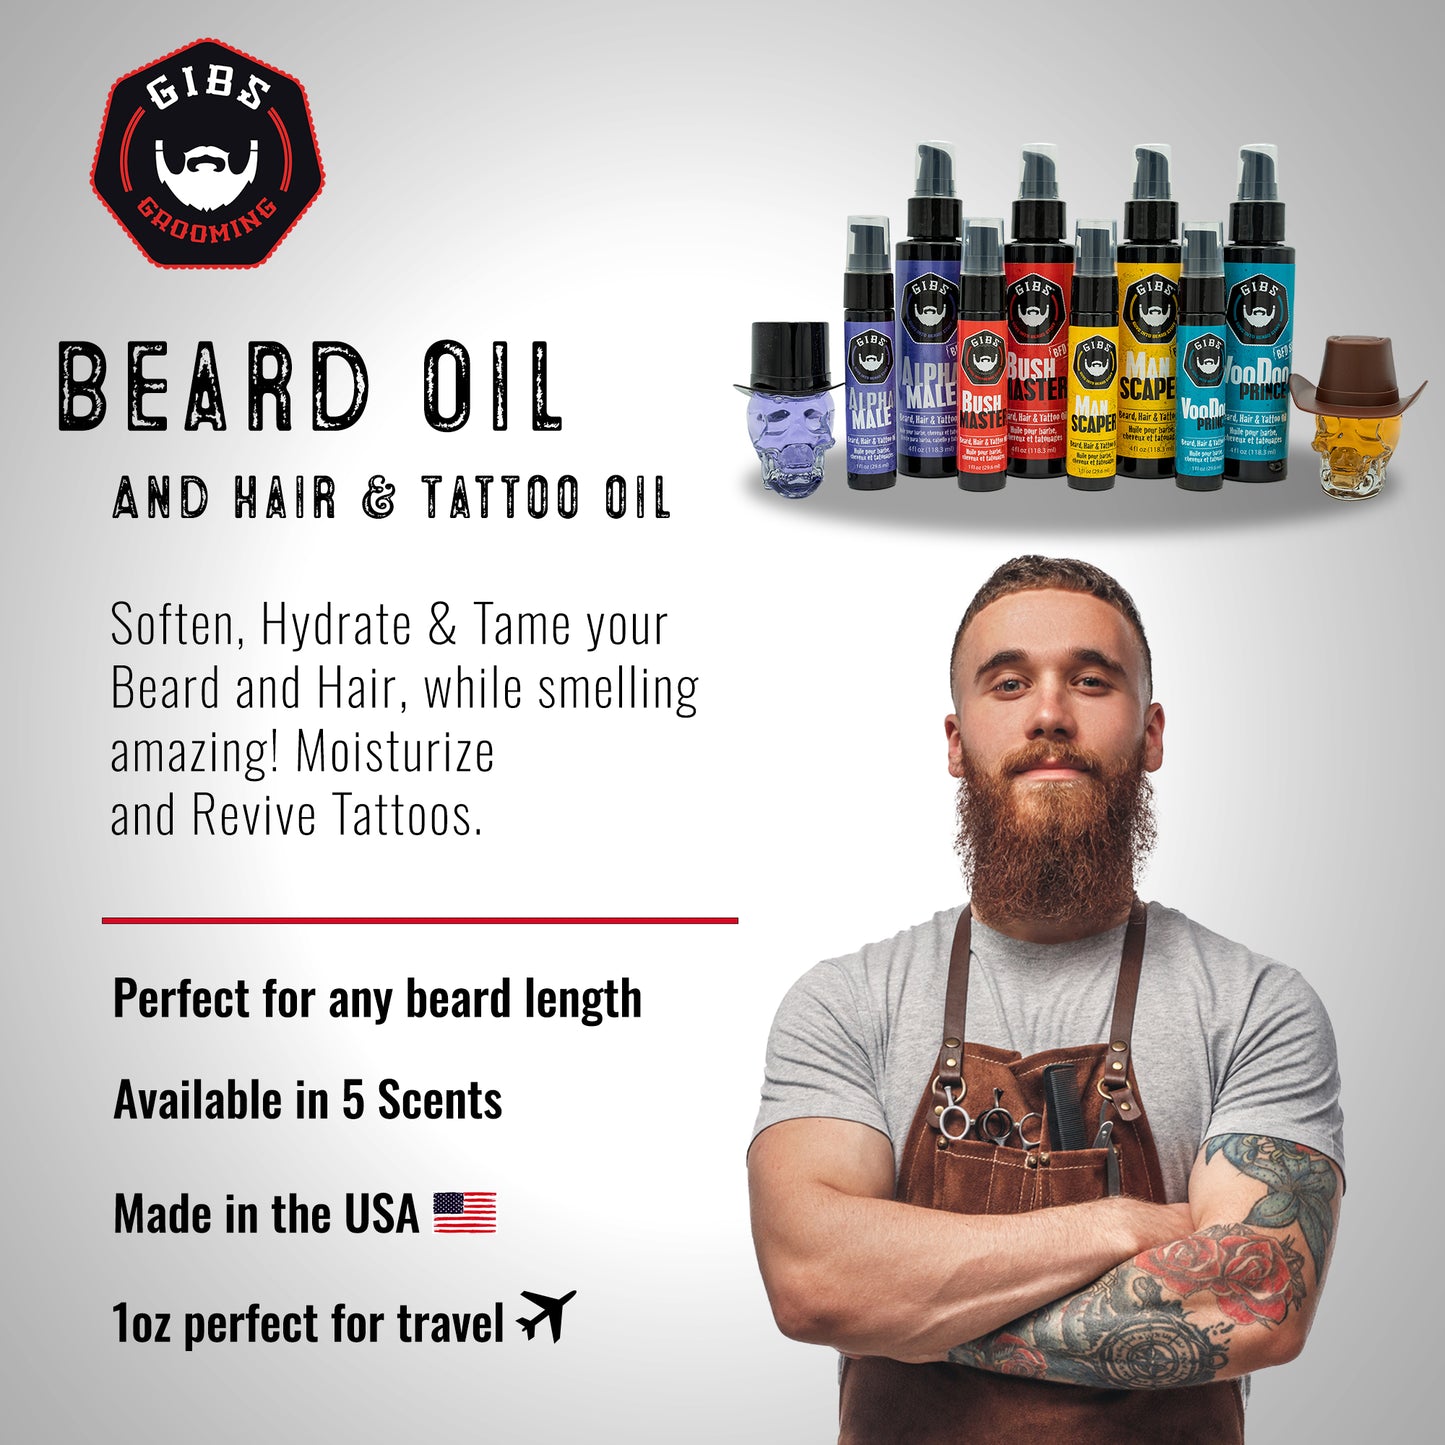 Manscaper Beard, Hair & Tattoo Oil